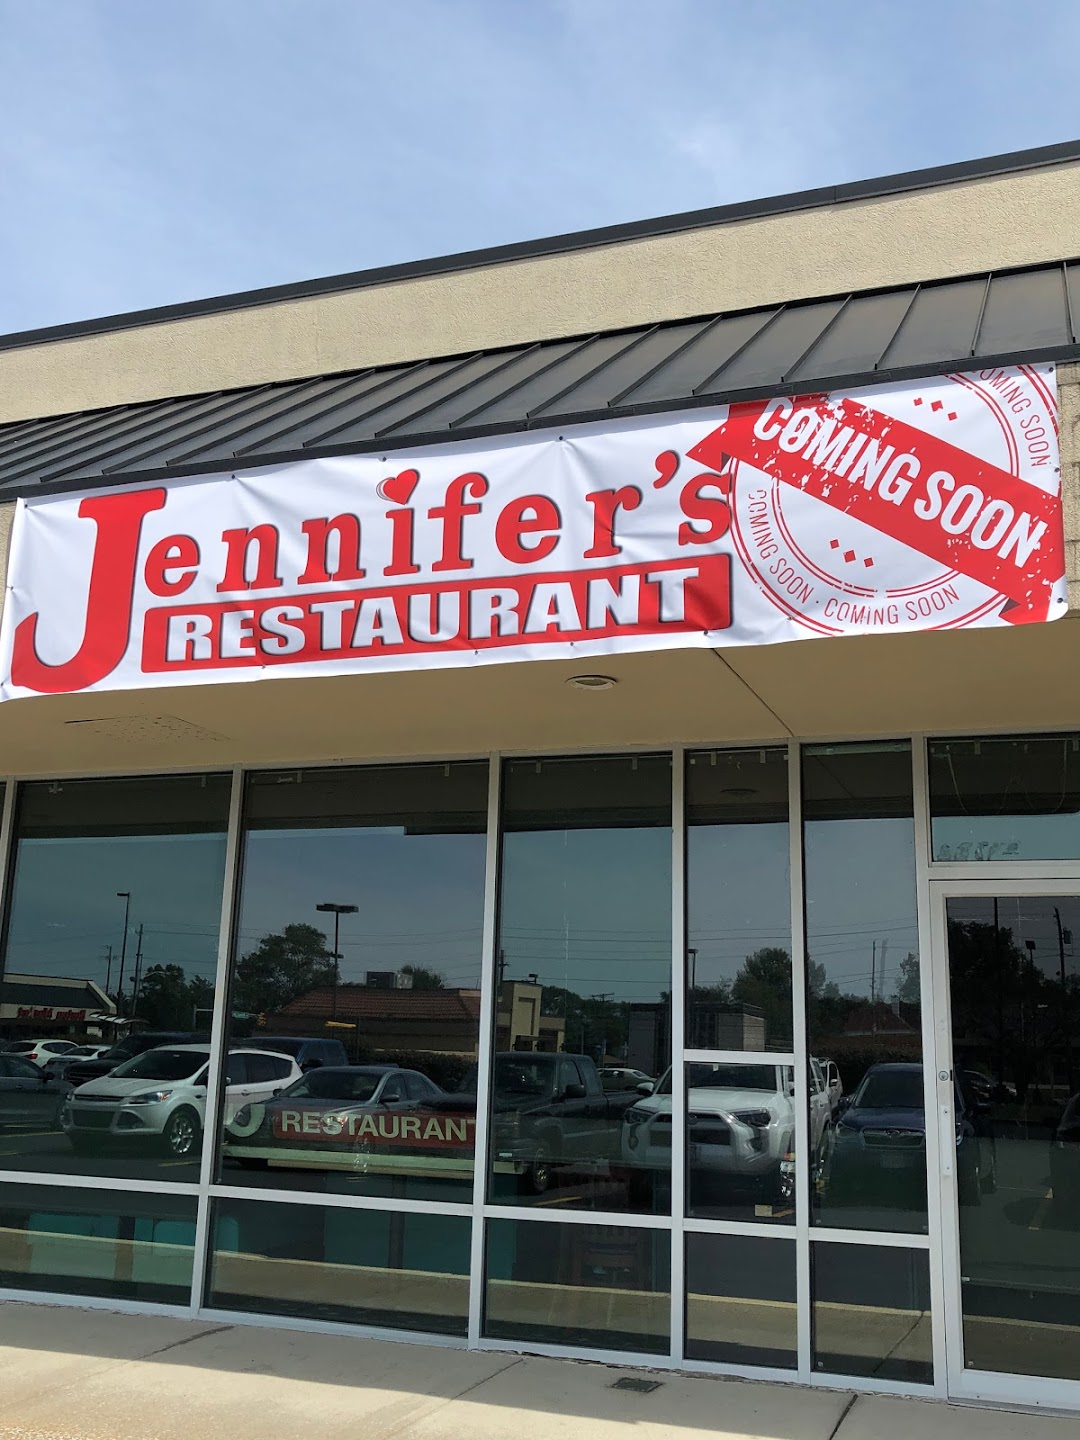 Jennifers Restaurant